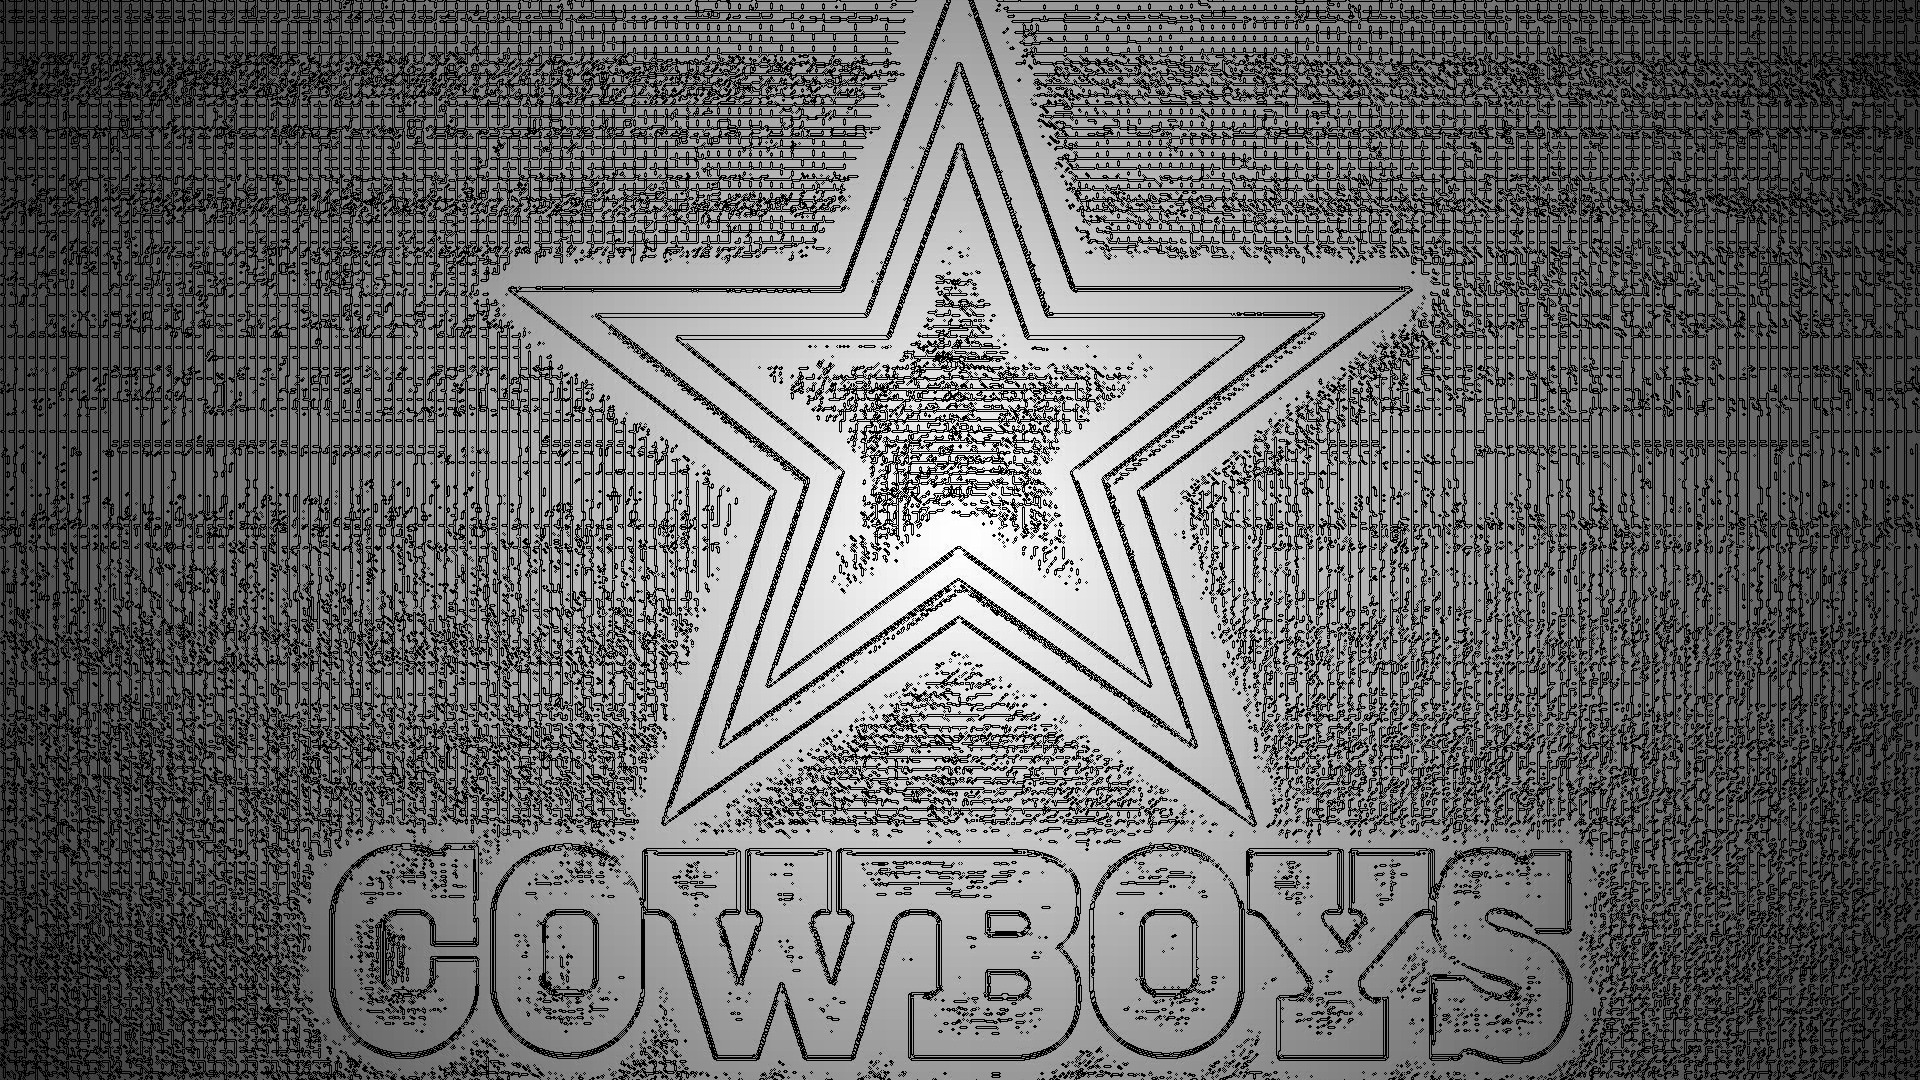 Dallas Cowboys Wallpaper 569 - HD Backgrounds